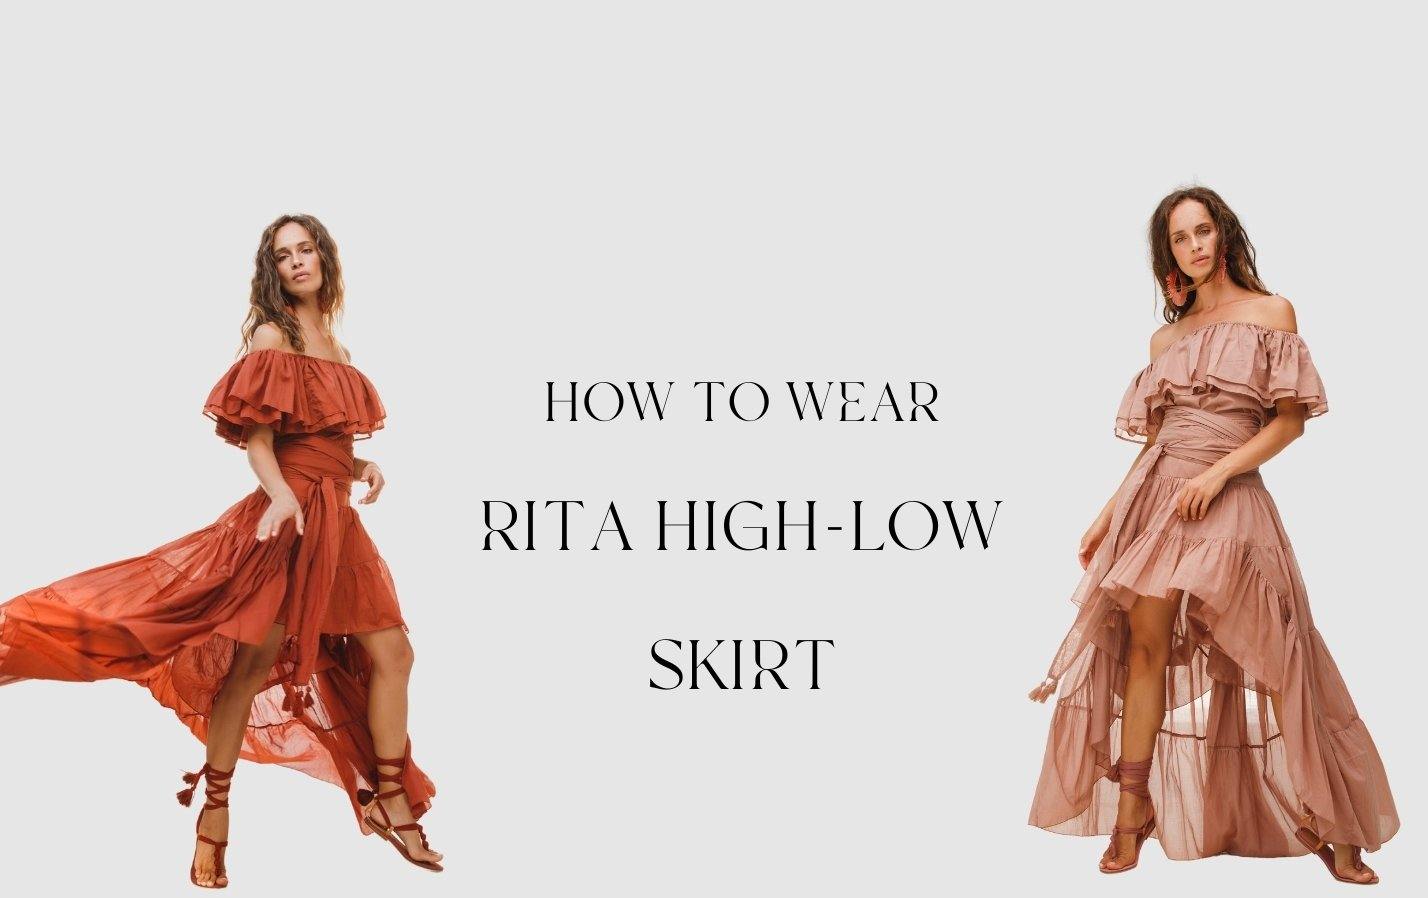 HOW TO WEAR RITA HIGH-LOW SKIRT - Erika Peña